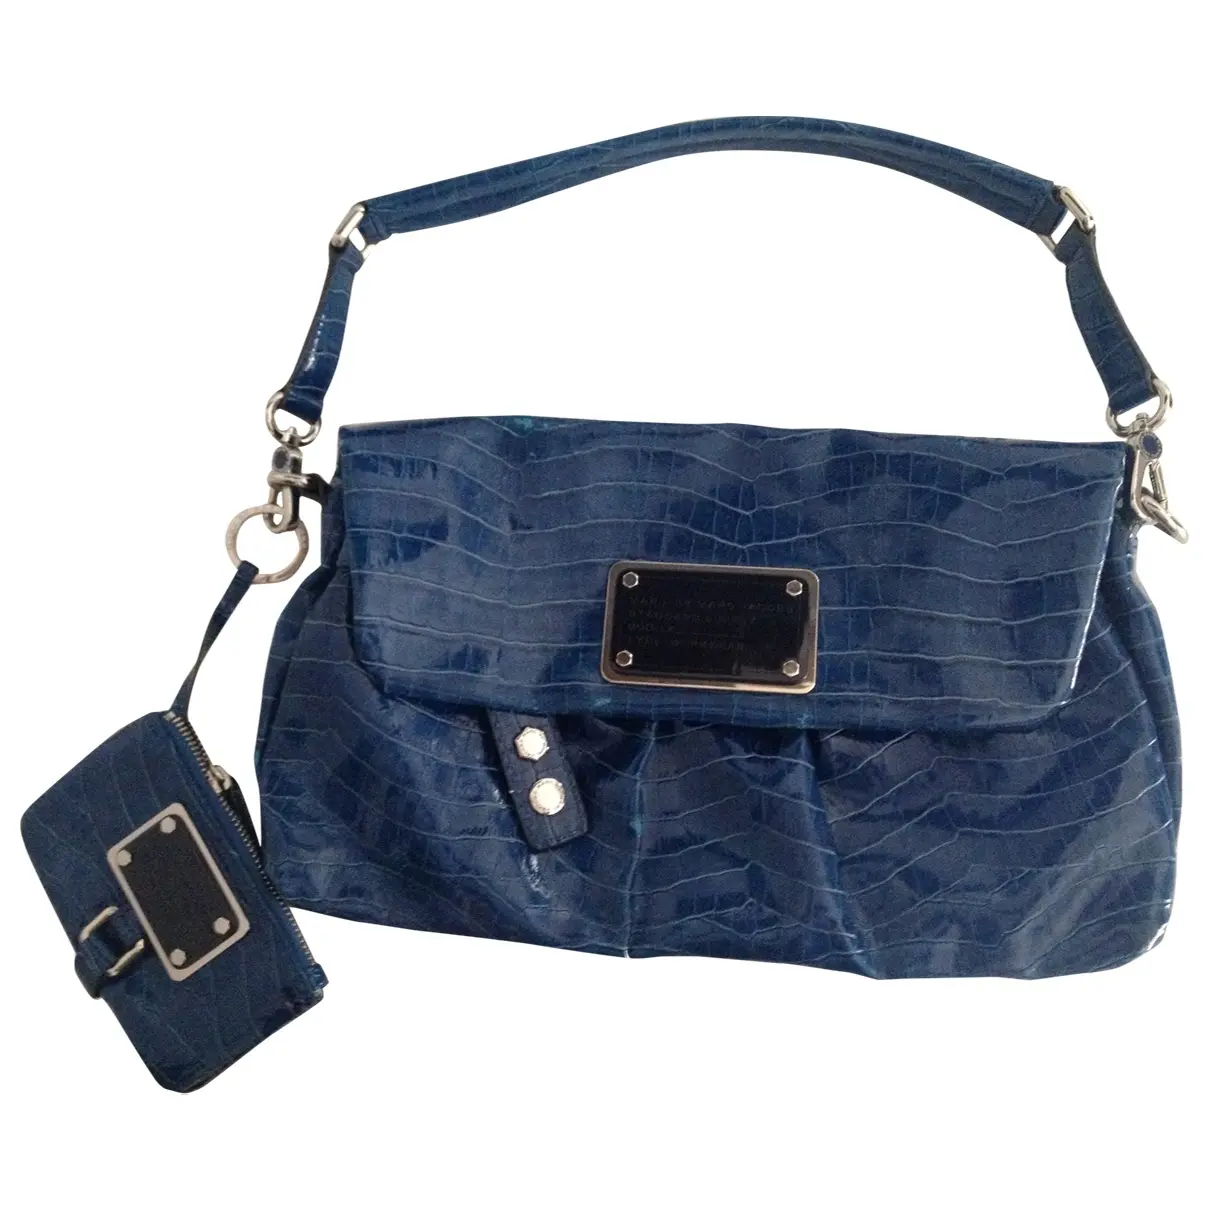 Blue Patent leather Handbag Marc by Marc Jacobs